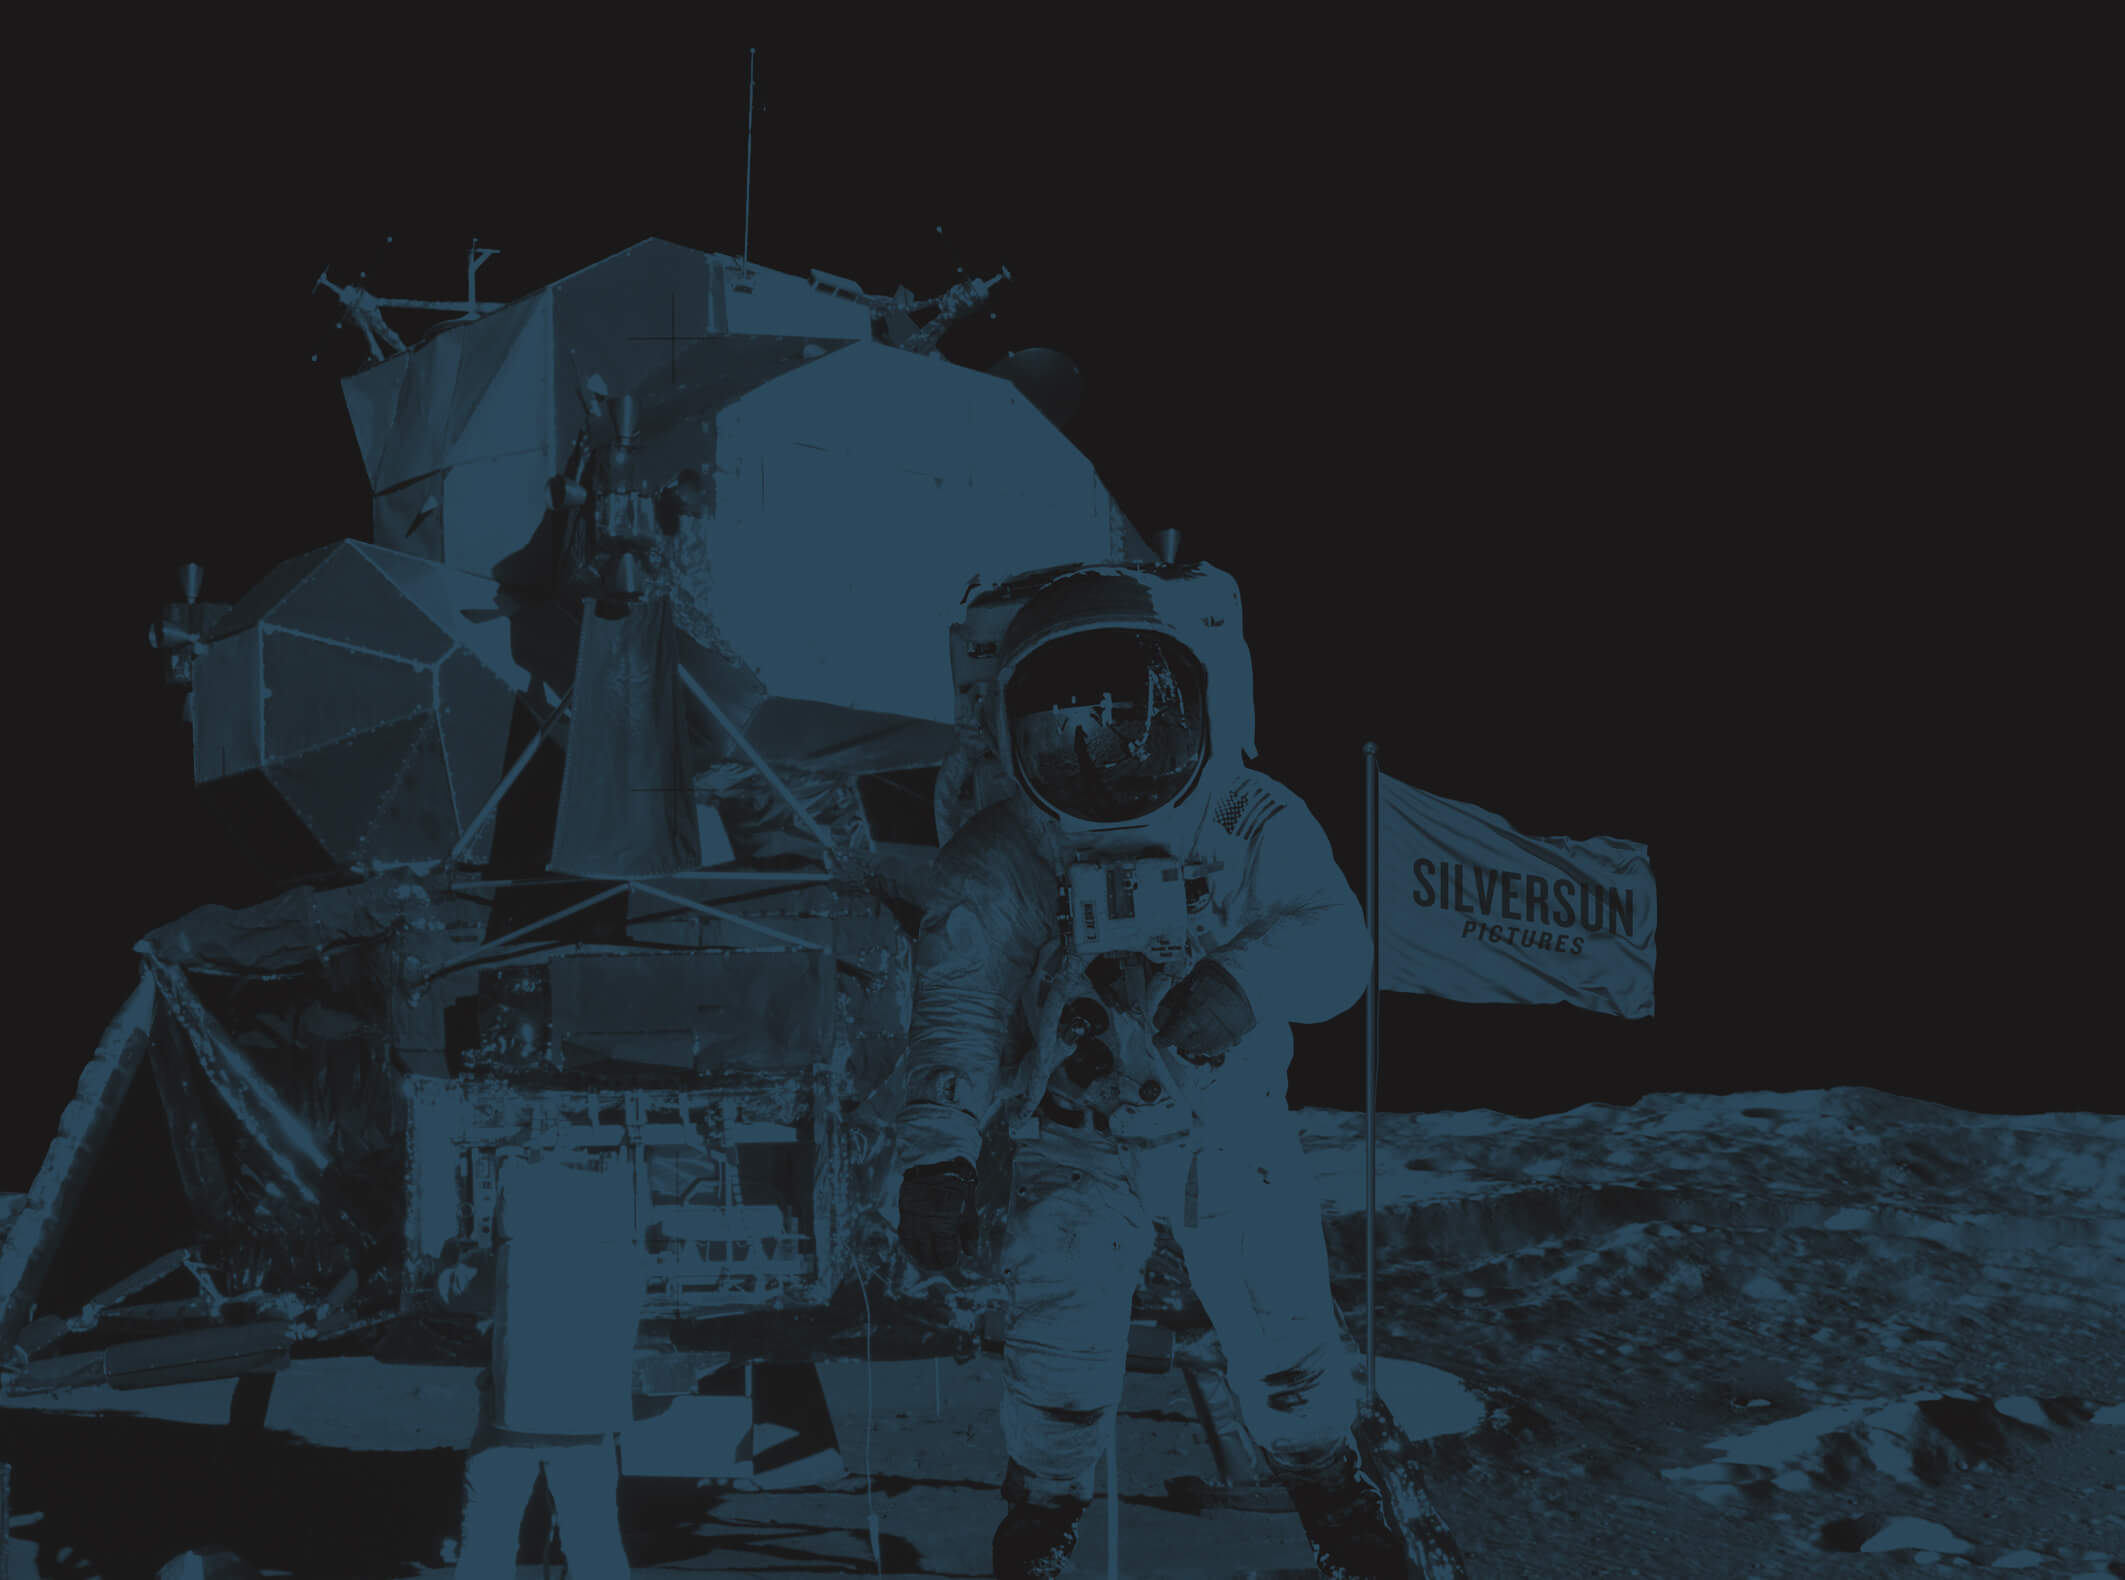 Moon landing background image